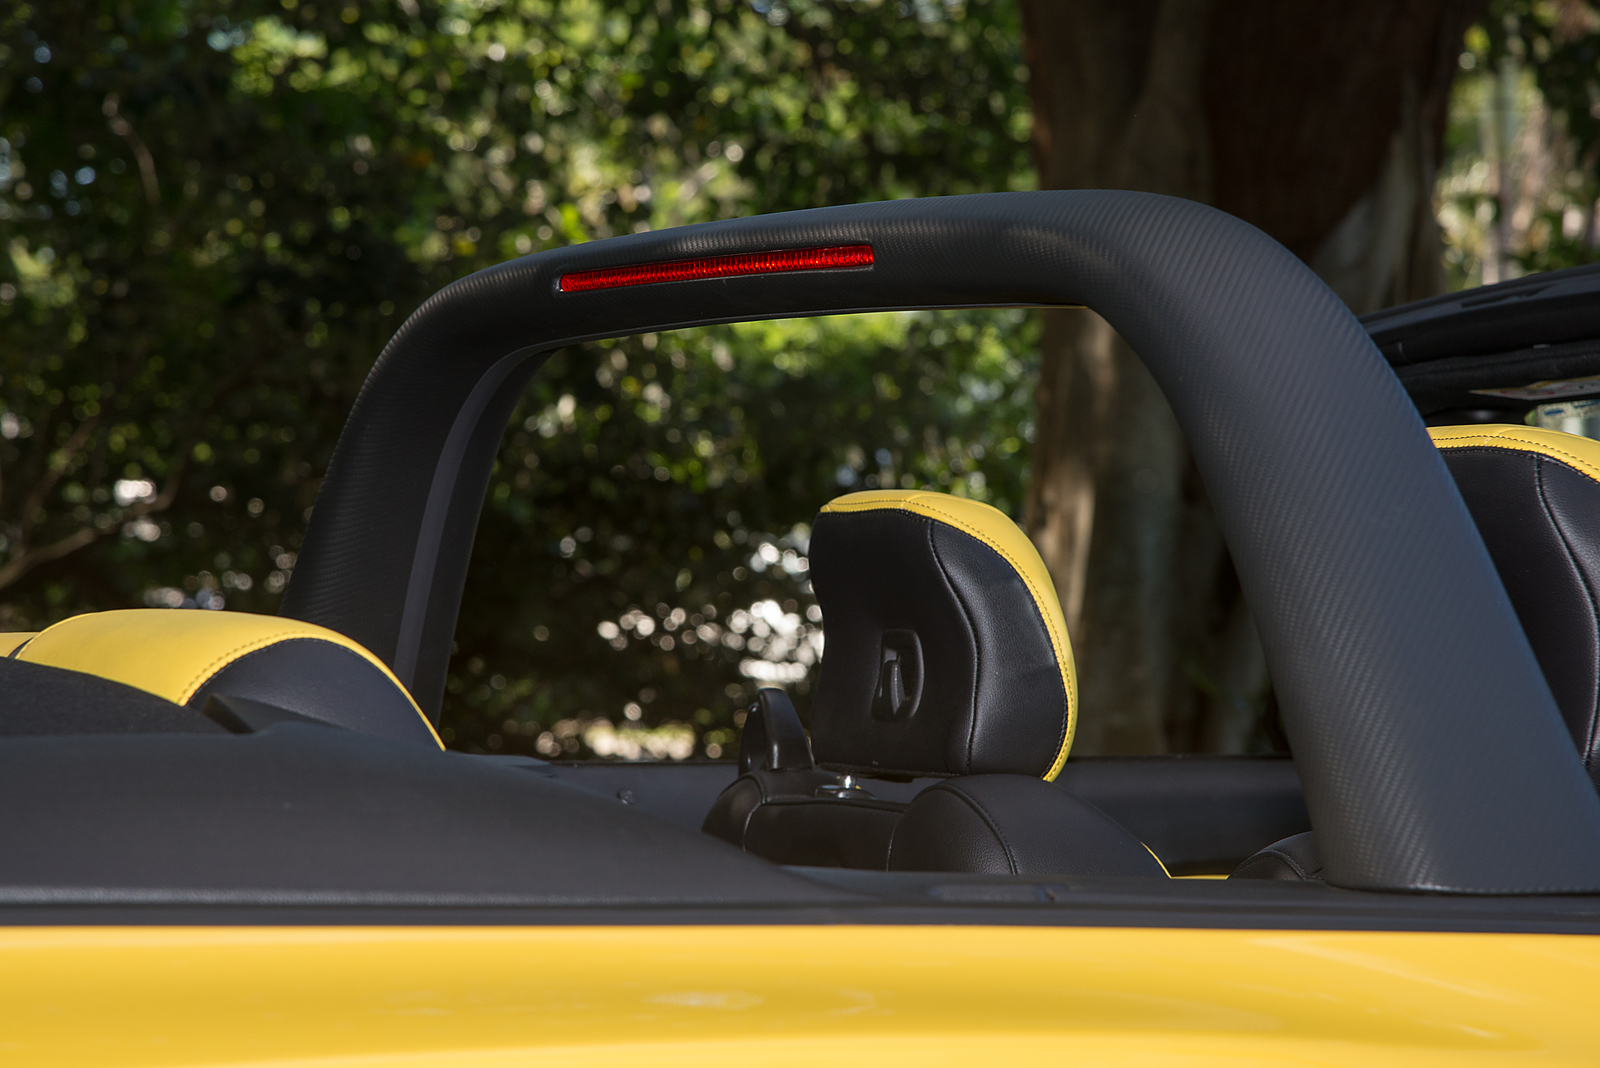 2015-22 Mustang Convertible Light Bar - Carbon Fibre   SPRING SALE